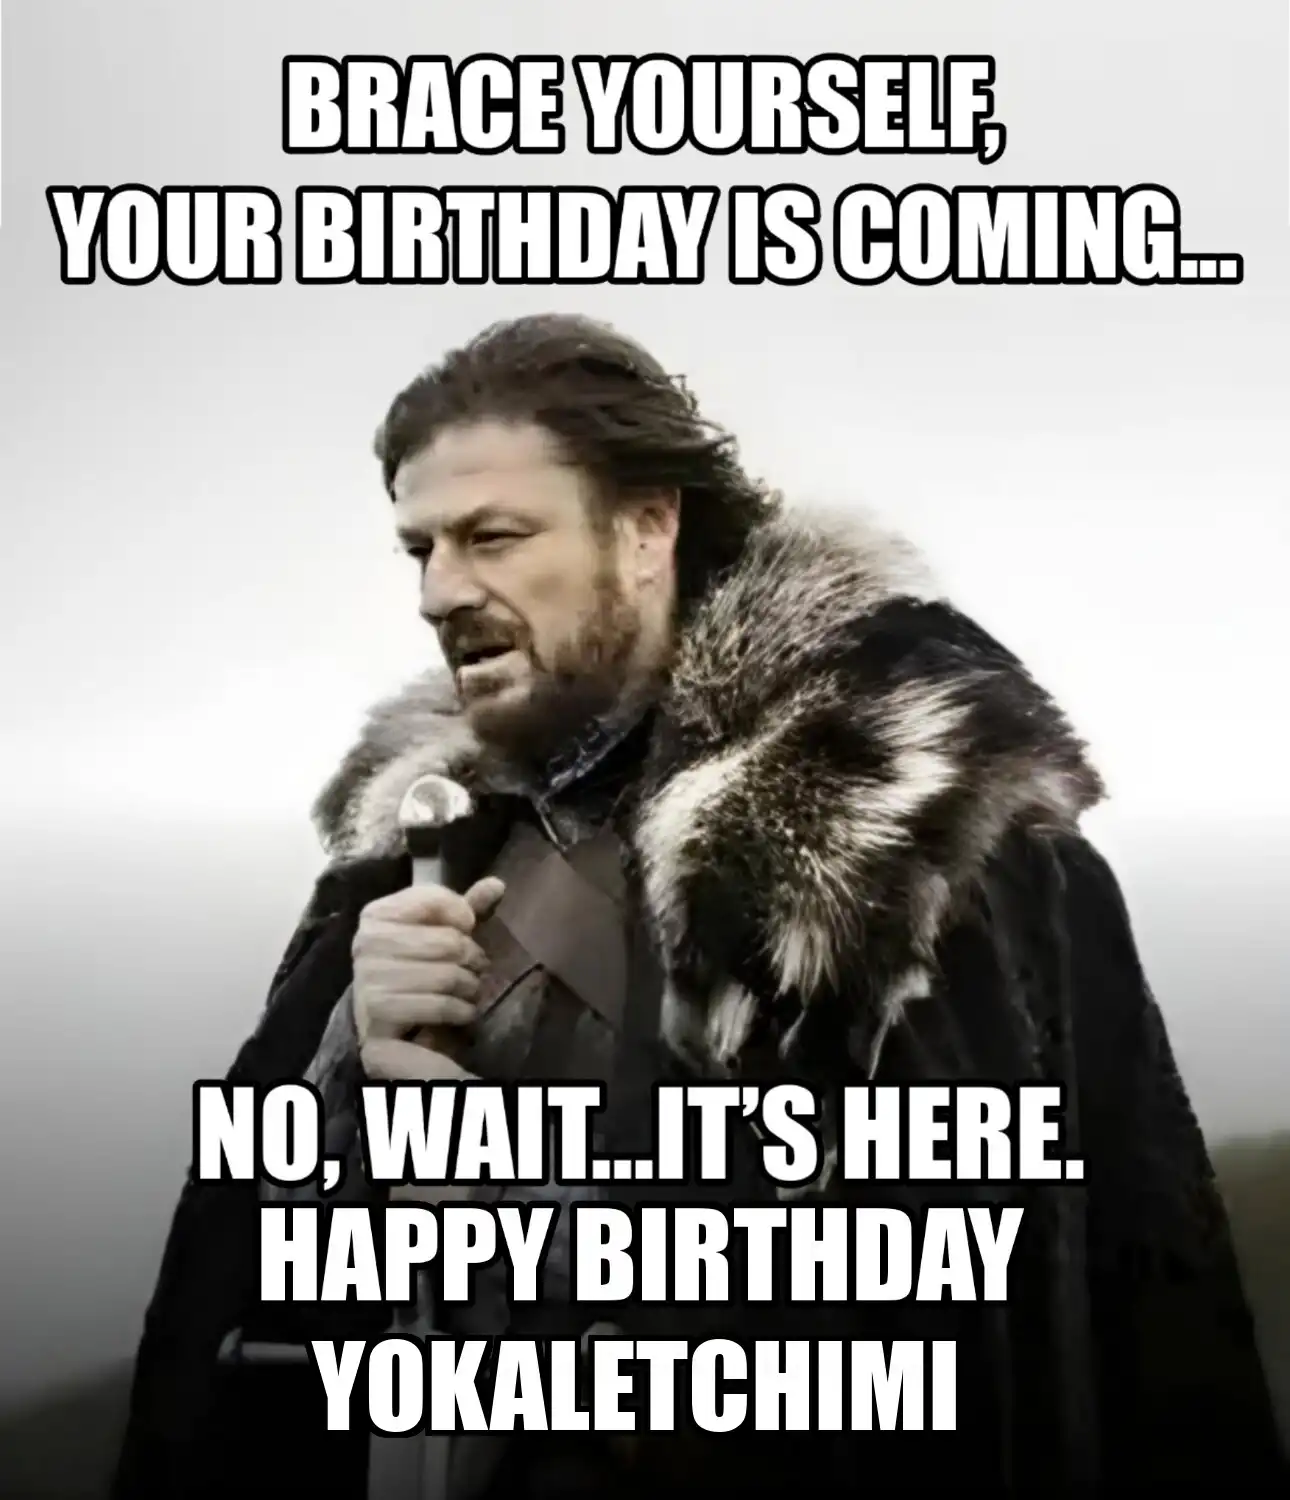 Happy Birthday Yokaletchimi Brace Yourself Your Birthday Is Coming Meme